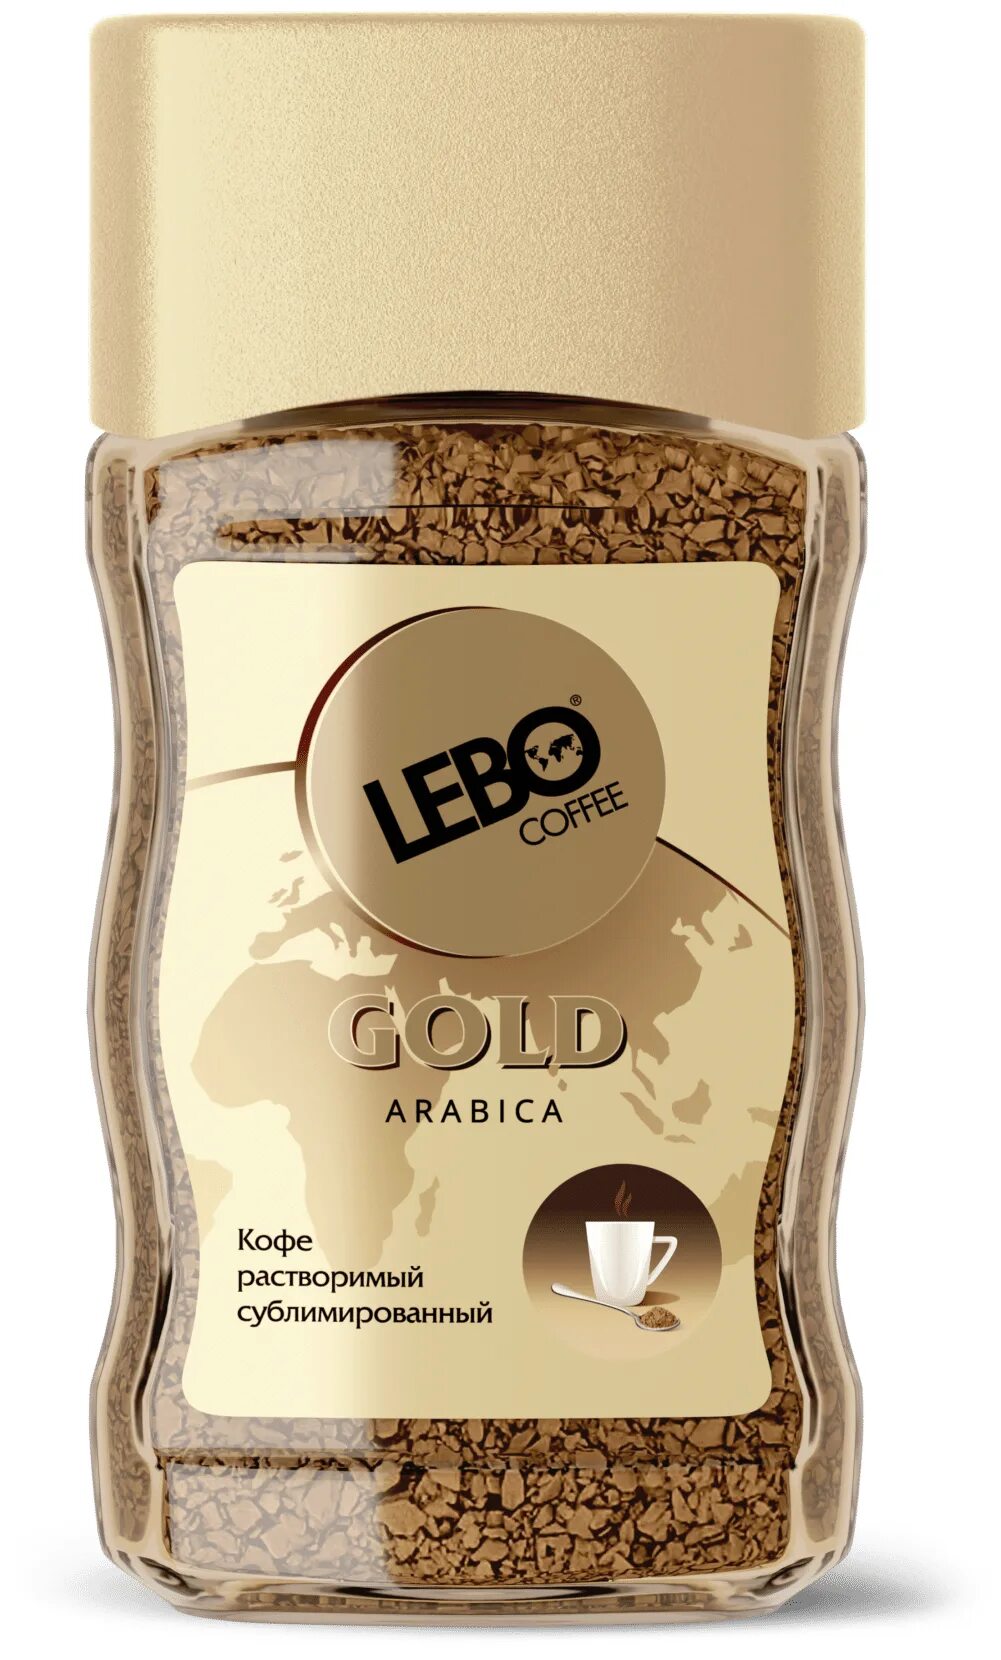 Кофе Лебо Голд 100г. Кофе Лебо Голд Арабика. Кофе Lebo Gold Арабика 100г. Лебо Голд стекло. Кофе лебо растворимый